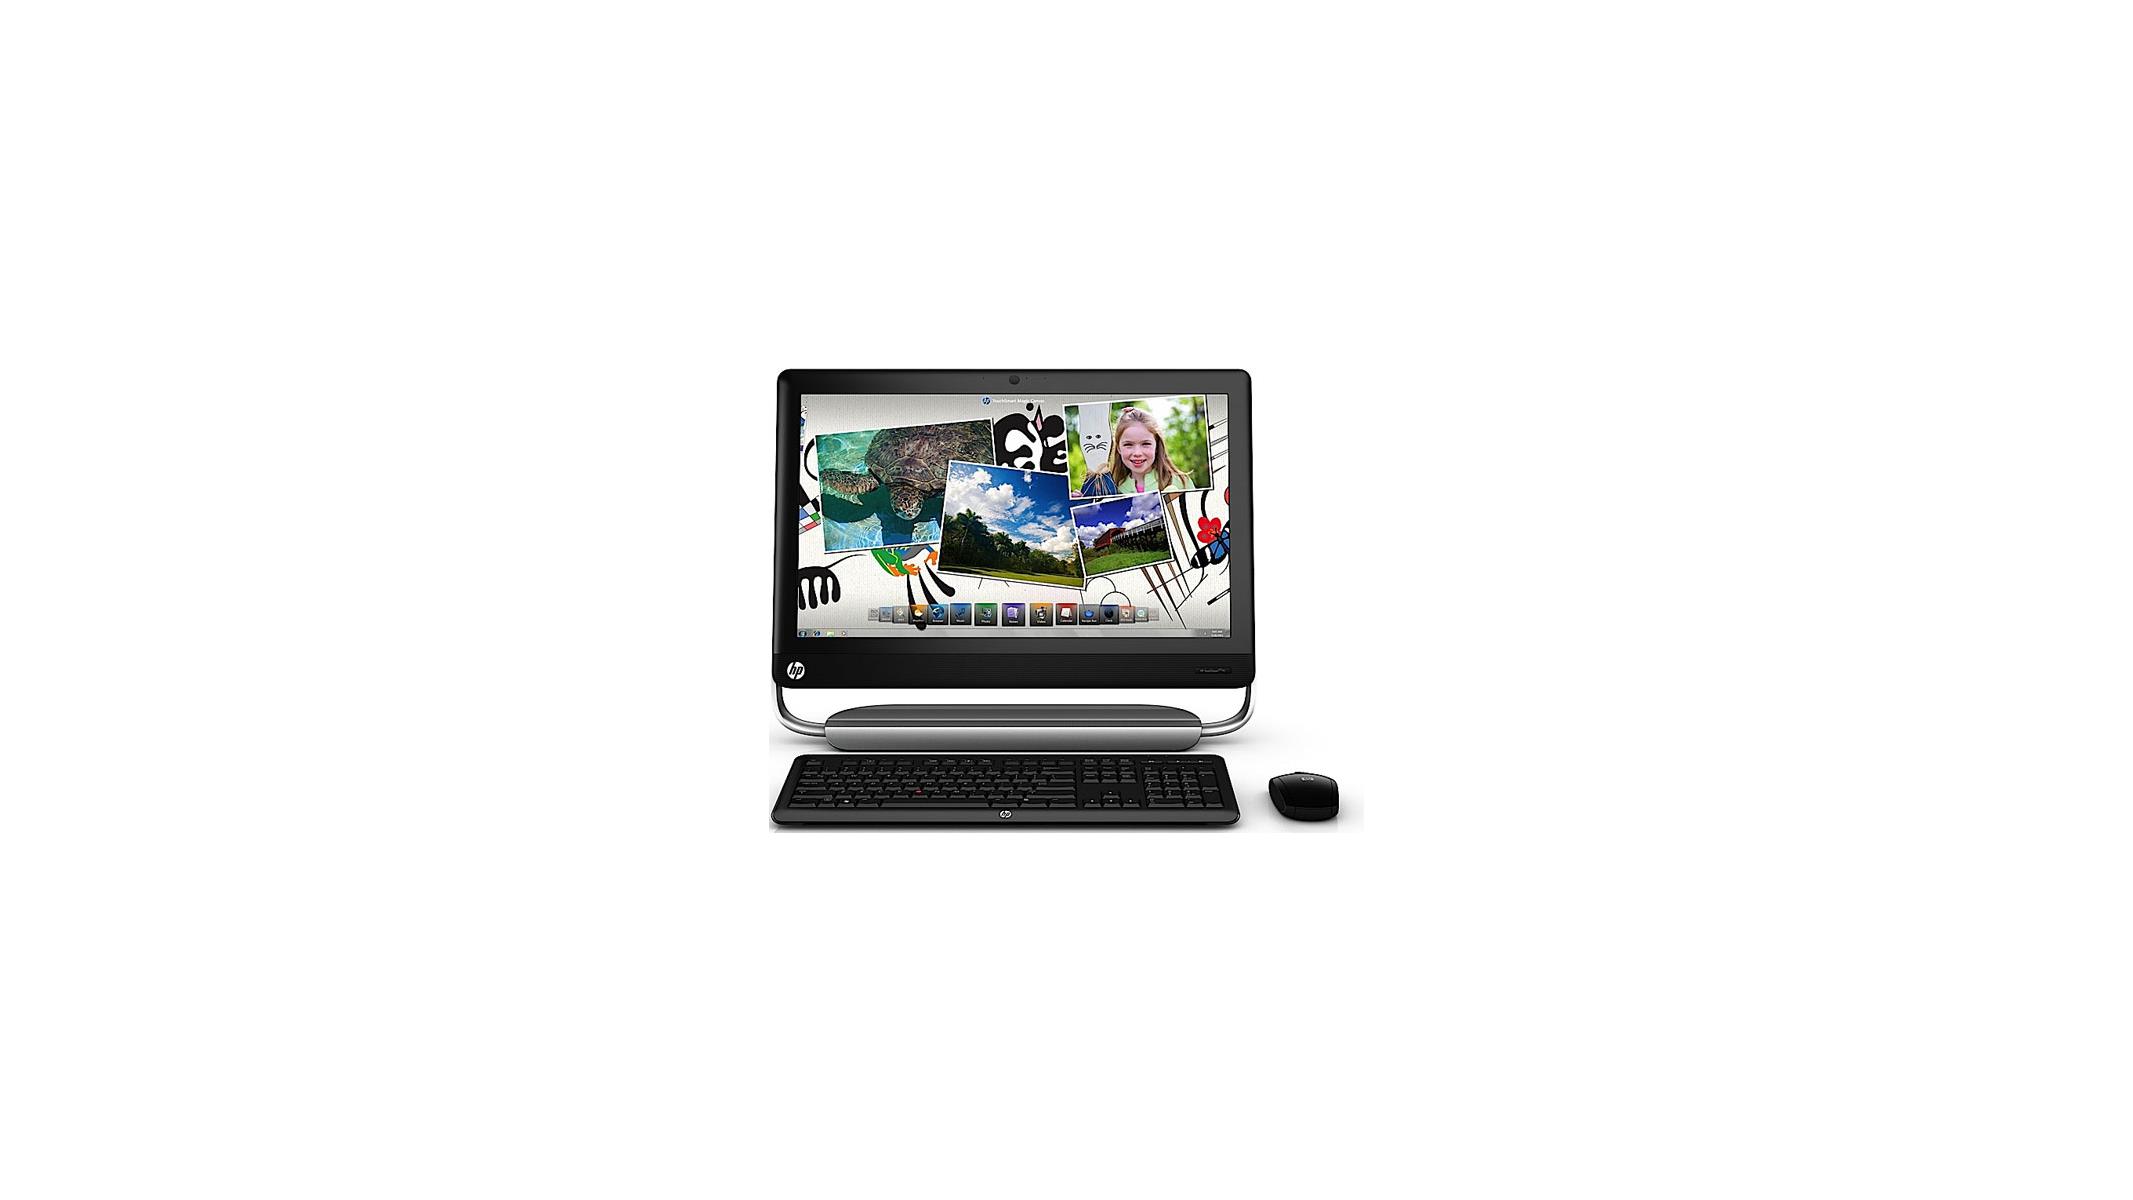 TouchSmart 520-1000 Desktop PC series